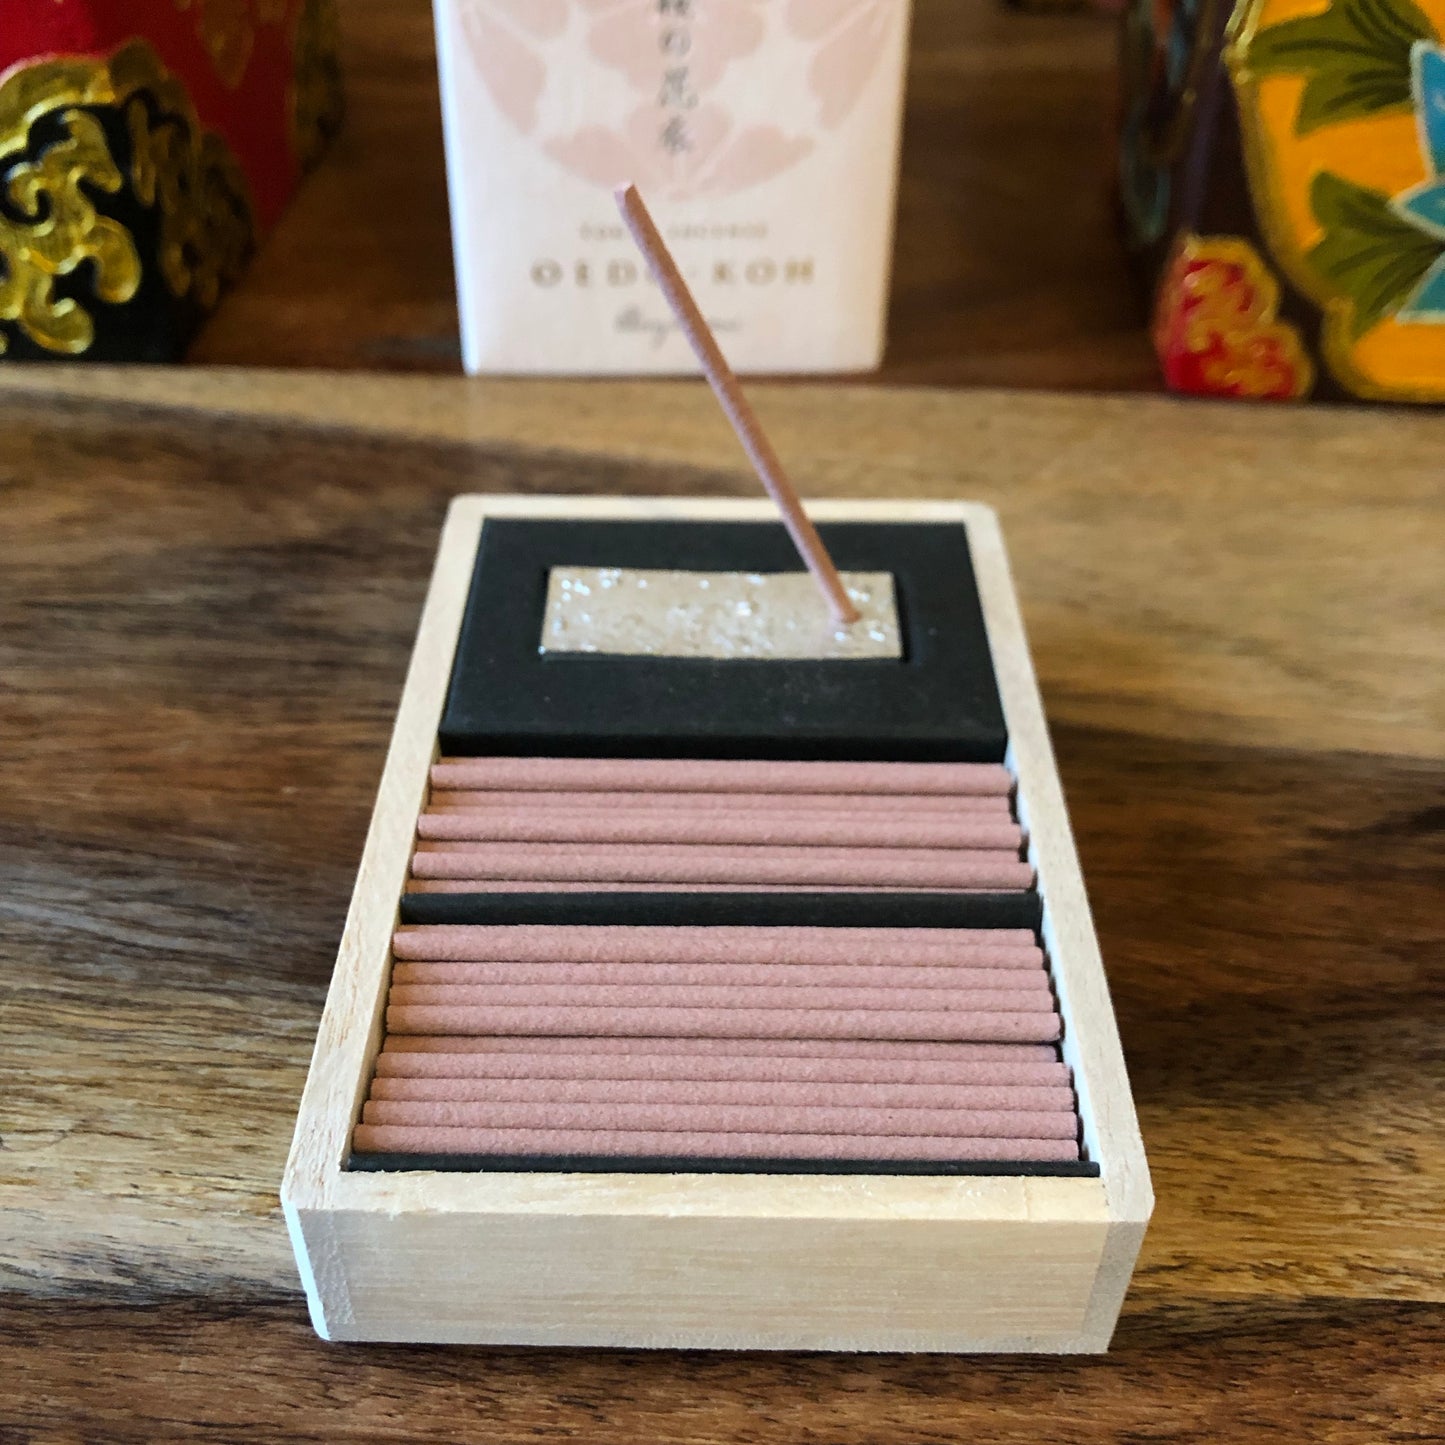 Oedo-Koh Cherry Blossom Incense (60 Sticks)